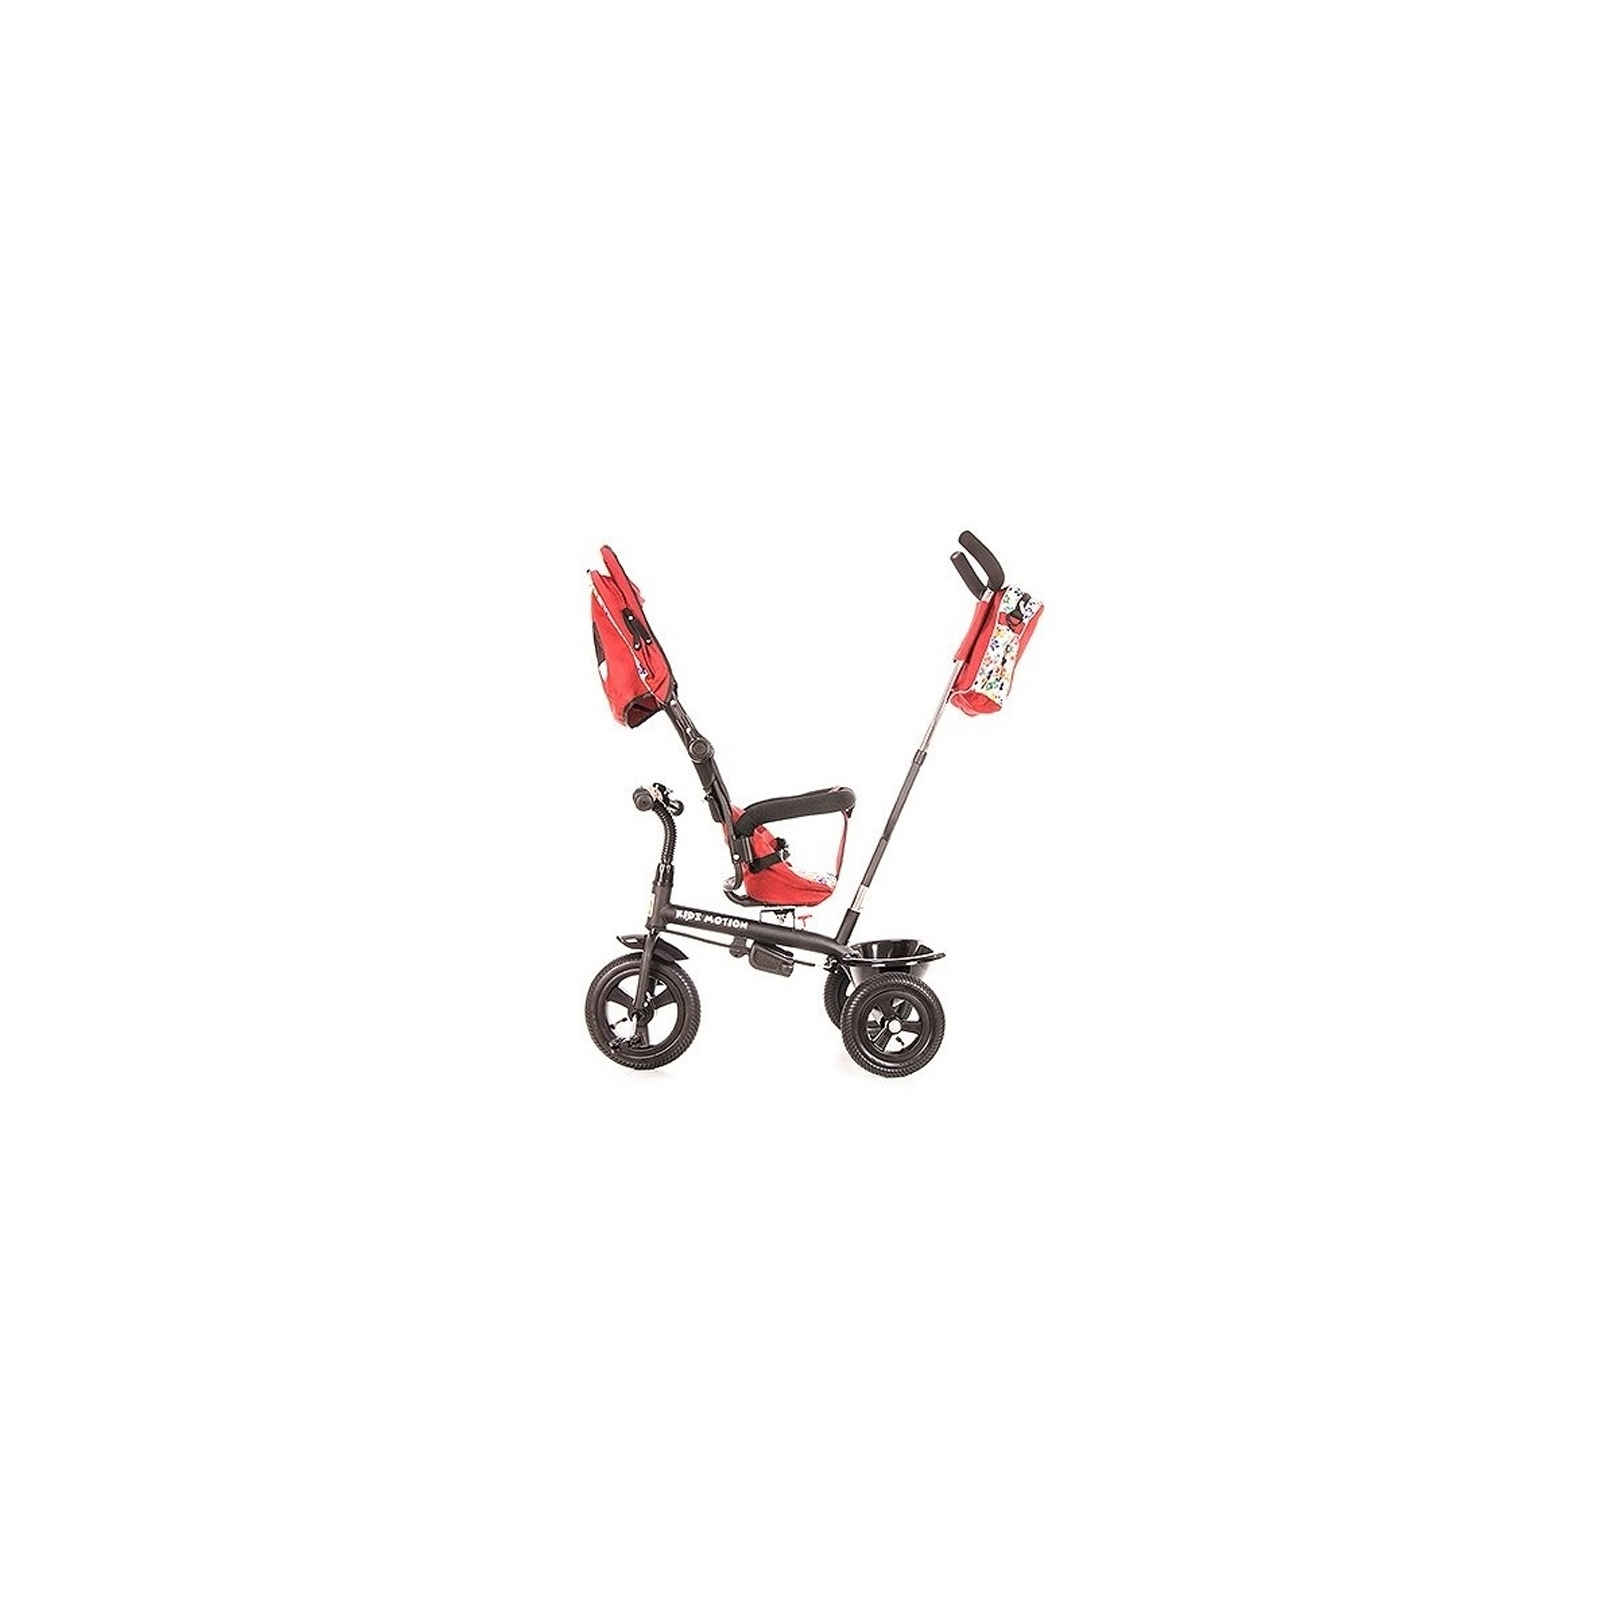 Дитячий велосипед KidzMotion Tobi Venture RED (115002/red) зображення 3